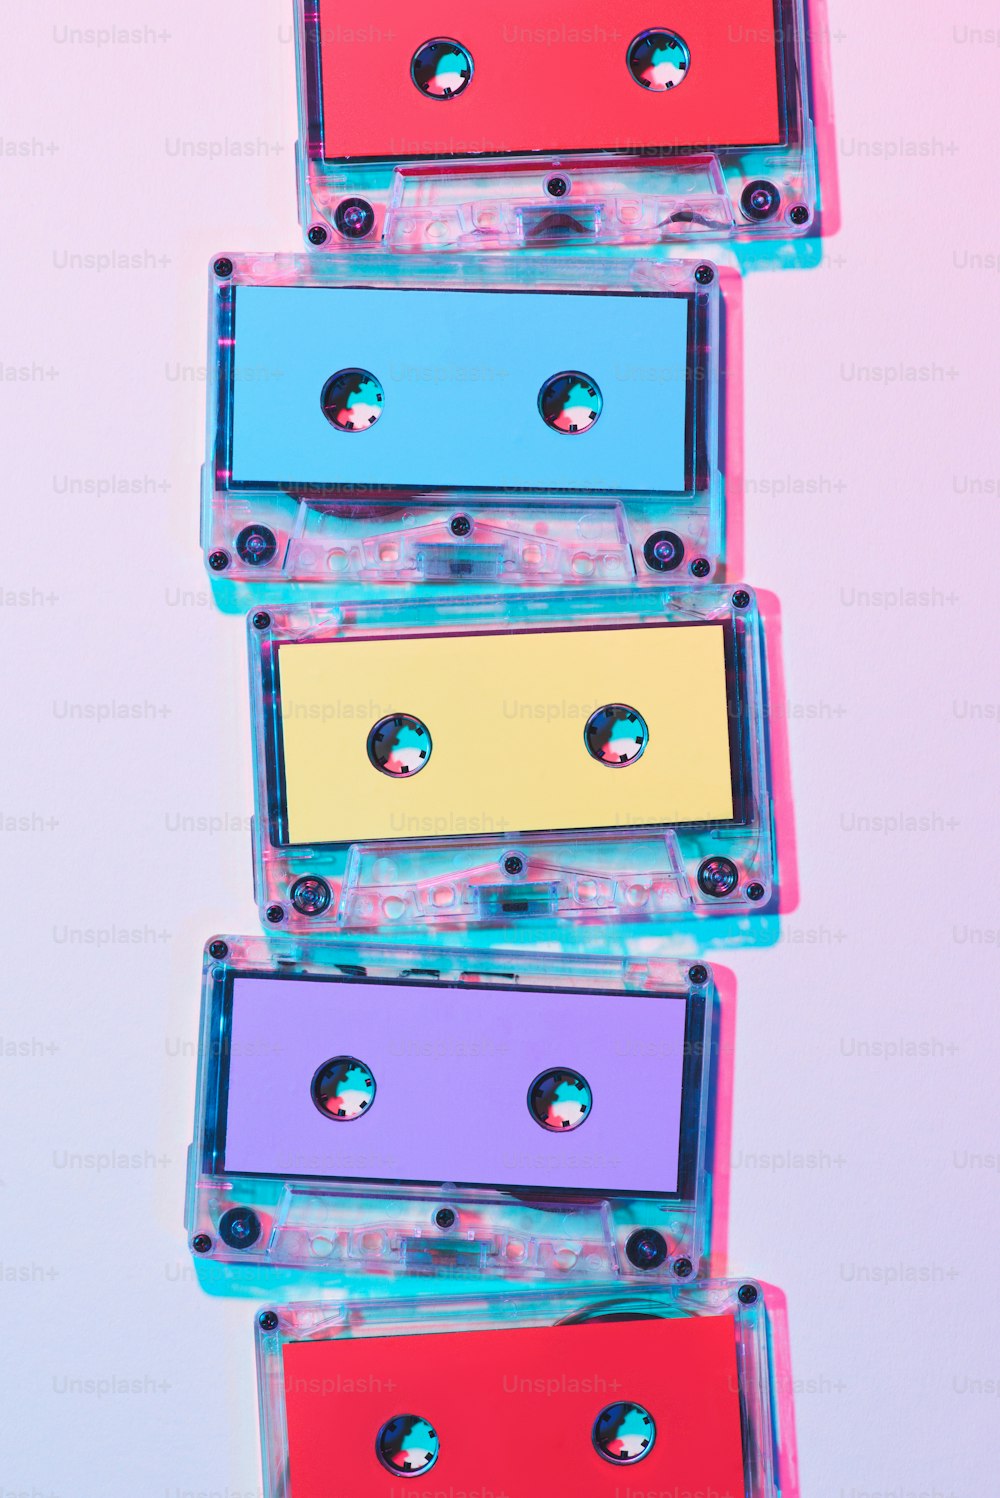 Vista superior de casetes de audio coloridos dispuestos sobre fondo púrpura